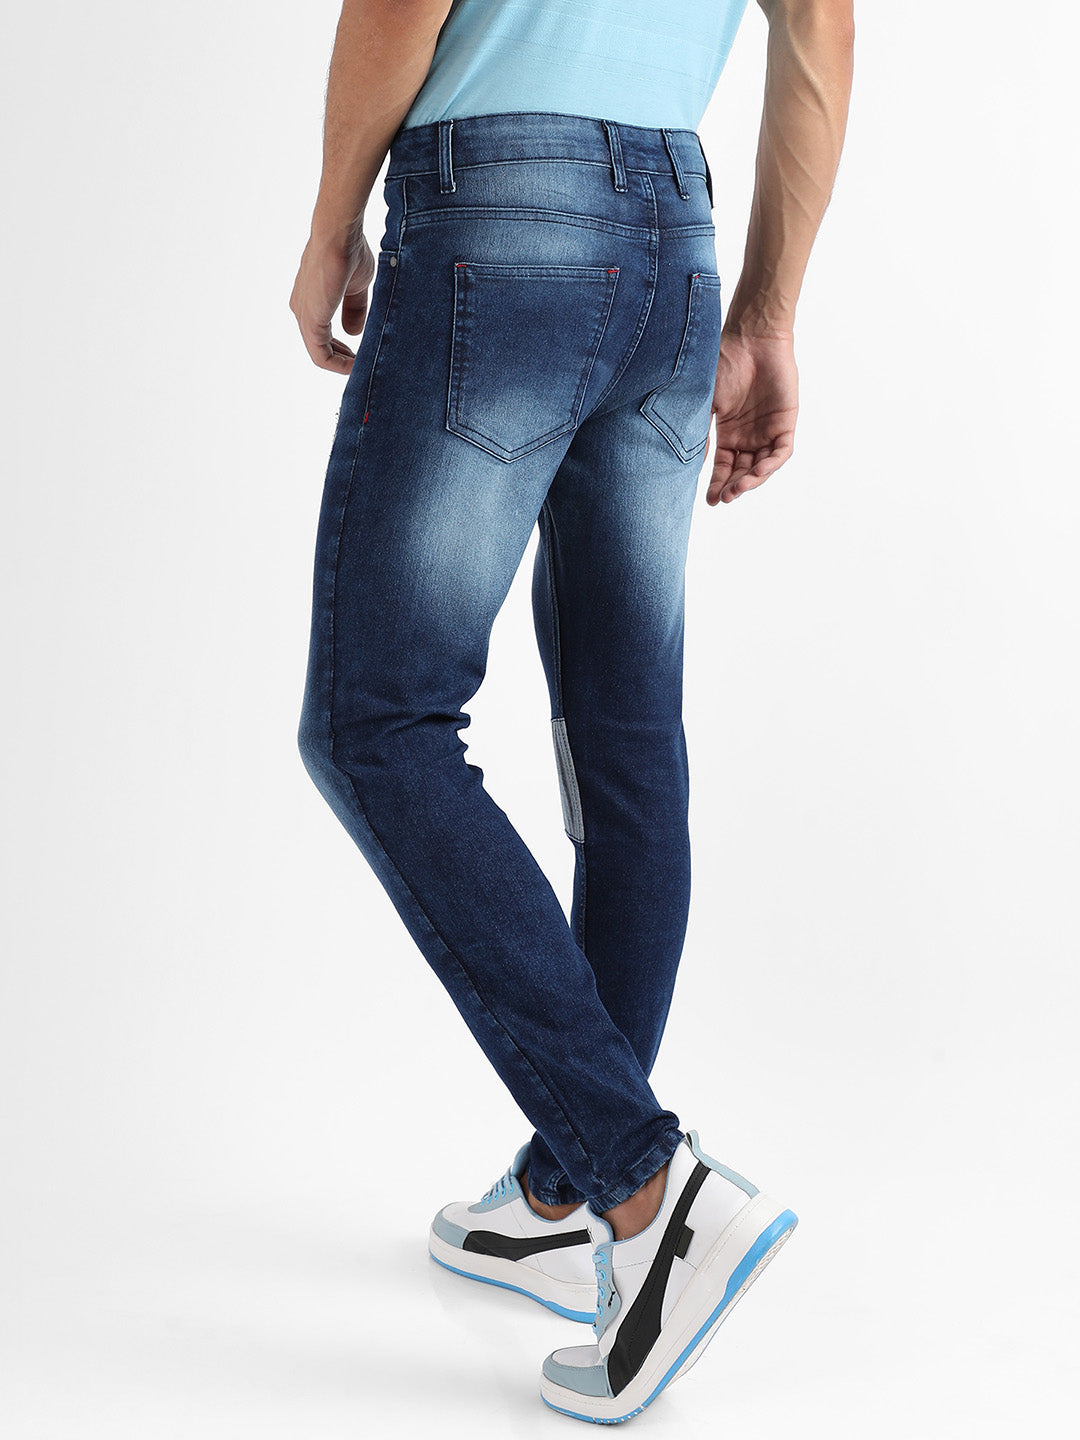 Contrast Patch Distressed Denim Jeans